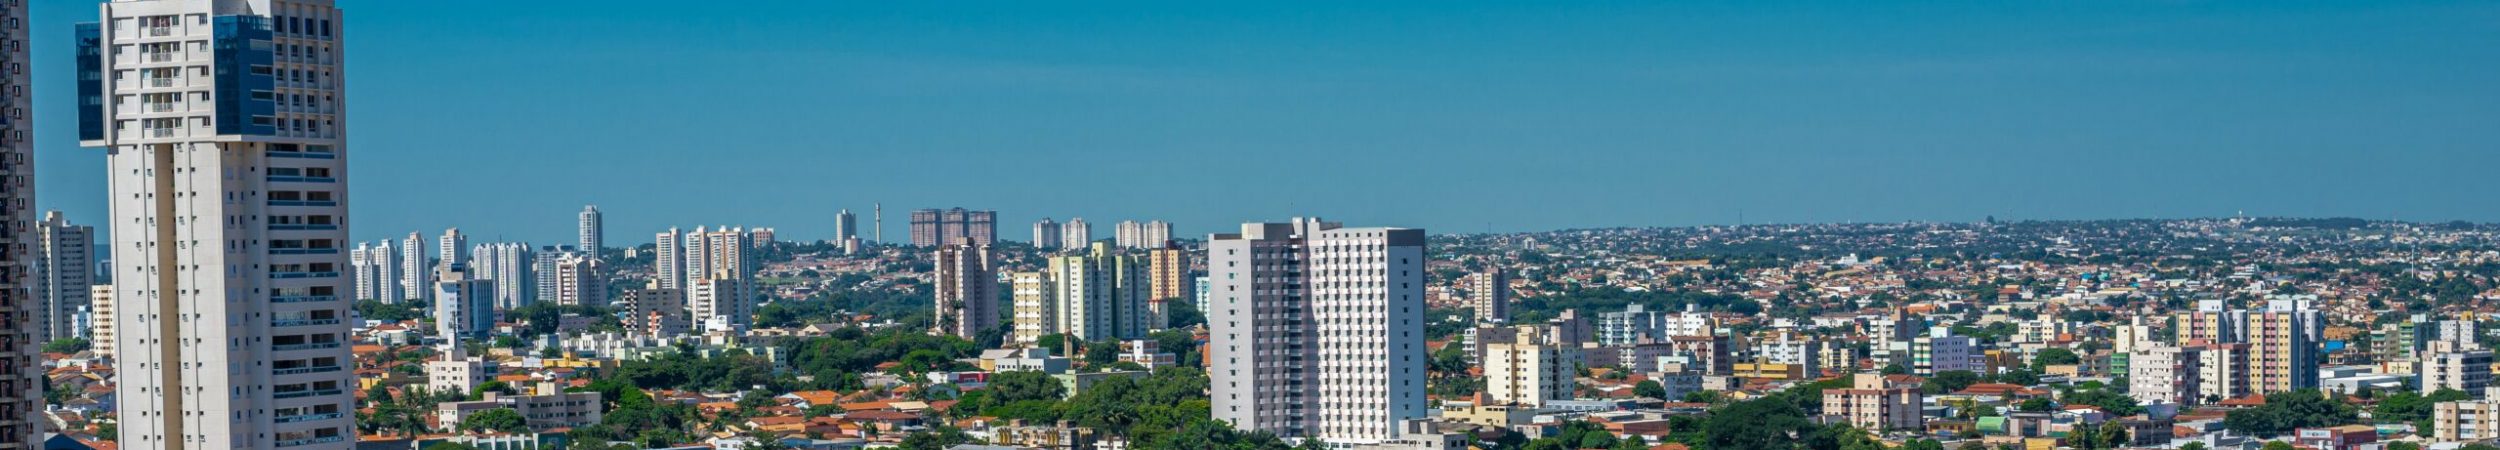 Goiania Goias Brazil Janeiro 20 2019  sunny day aerial view